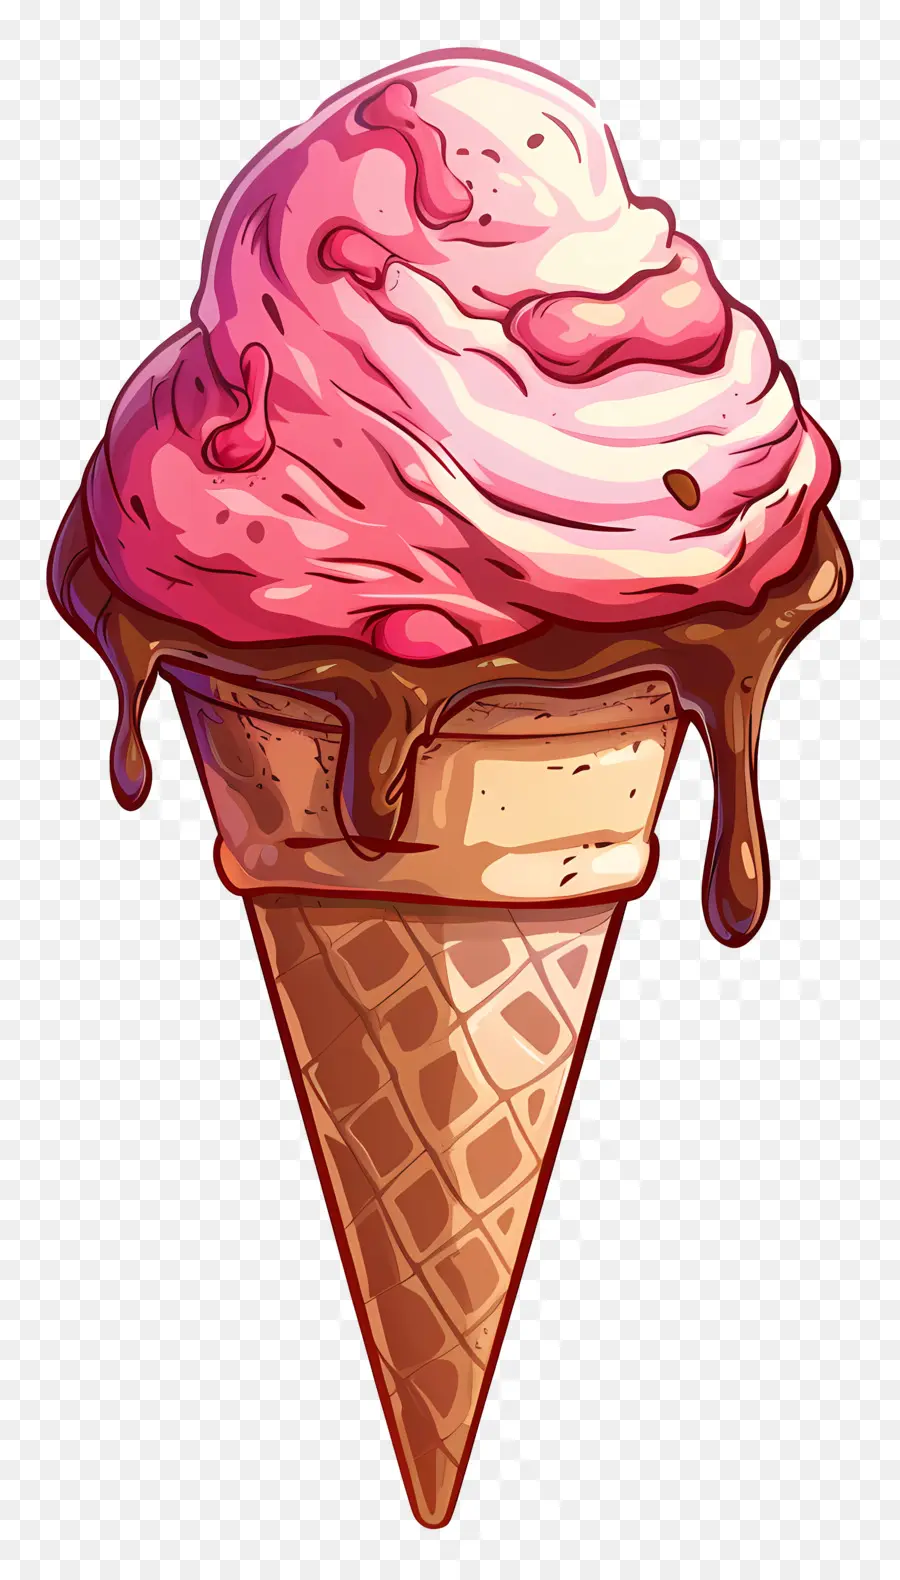 cartoon ice cream cartoon ice cream cone pink chocolate swirl dripping ice cream wafer cone